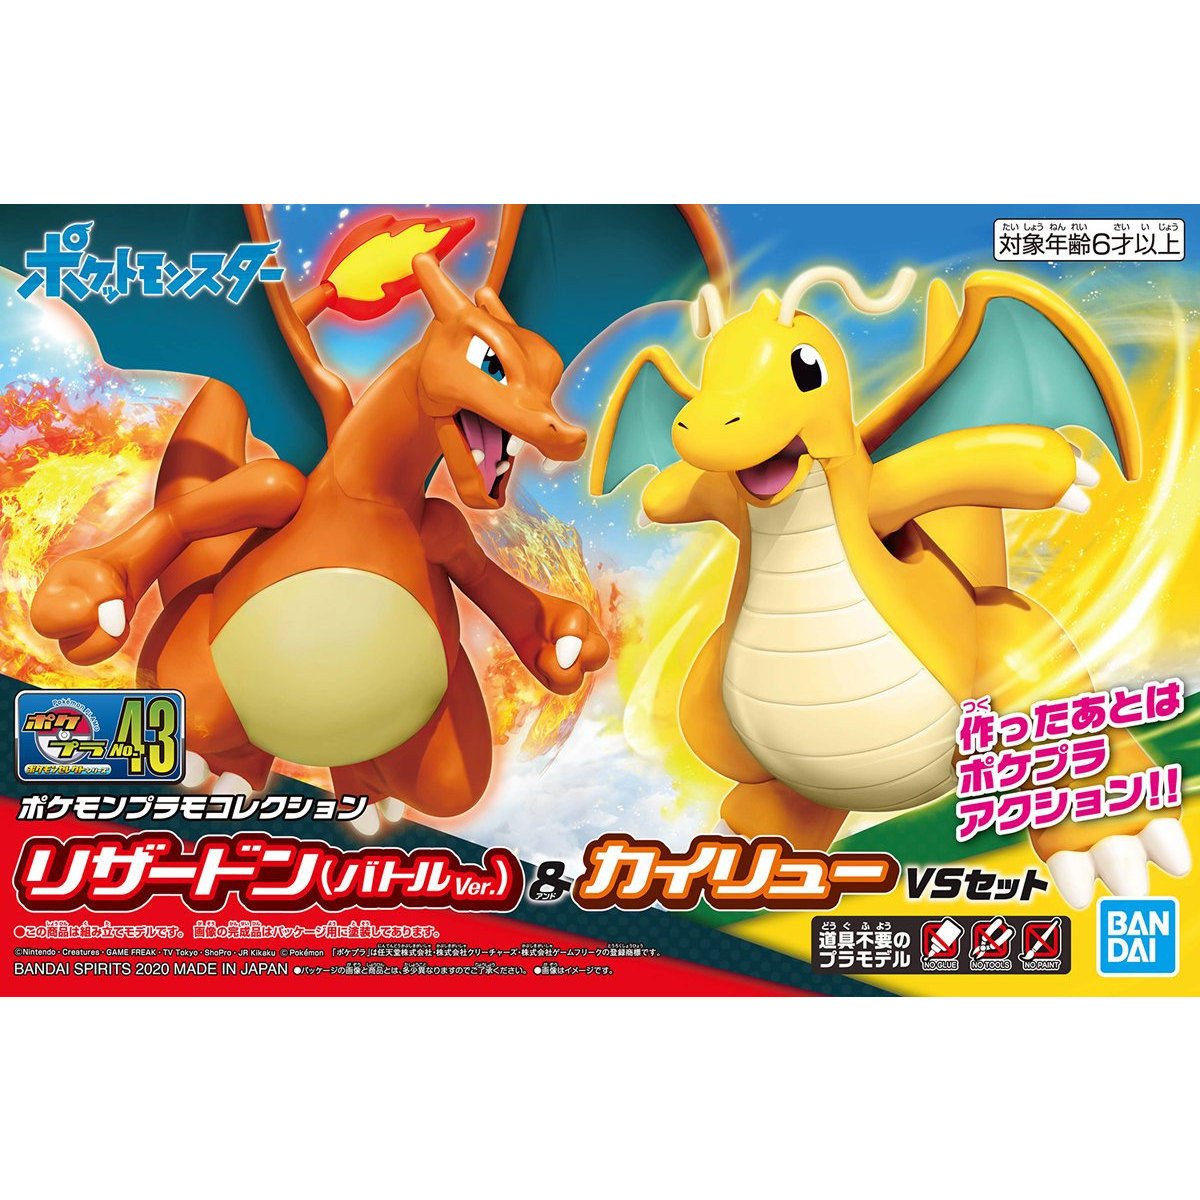 Mega Charizard X, Y Pokemon Monster Banpresto Collection Figure Toy Japan.